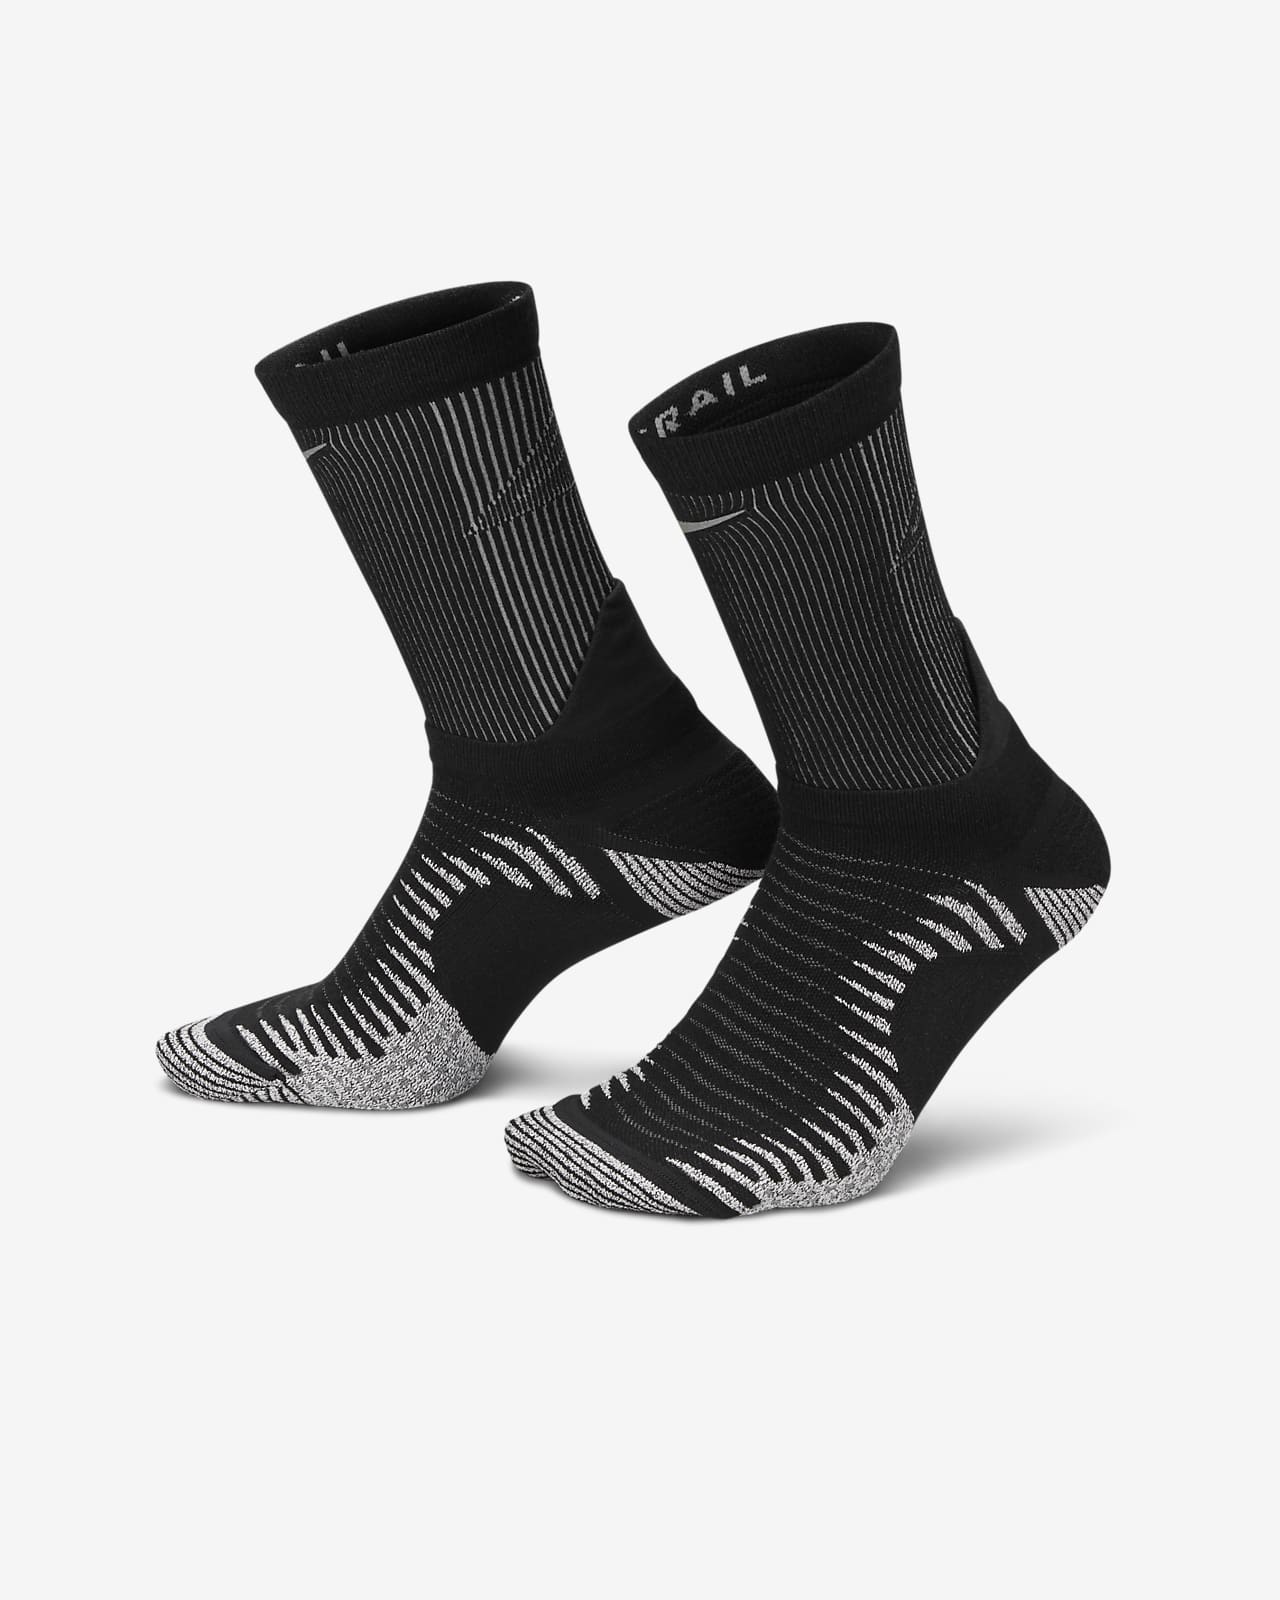  MudGear Paquete de calcetines de trail running de longitud  múltiple, 1 par de calcetines de compresión altos de alta calidad + 2 pares  de calcetines de trail running (negro/naranja, grande) 